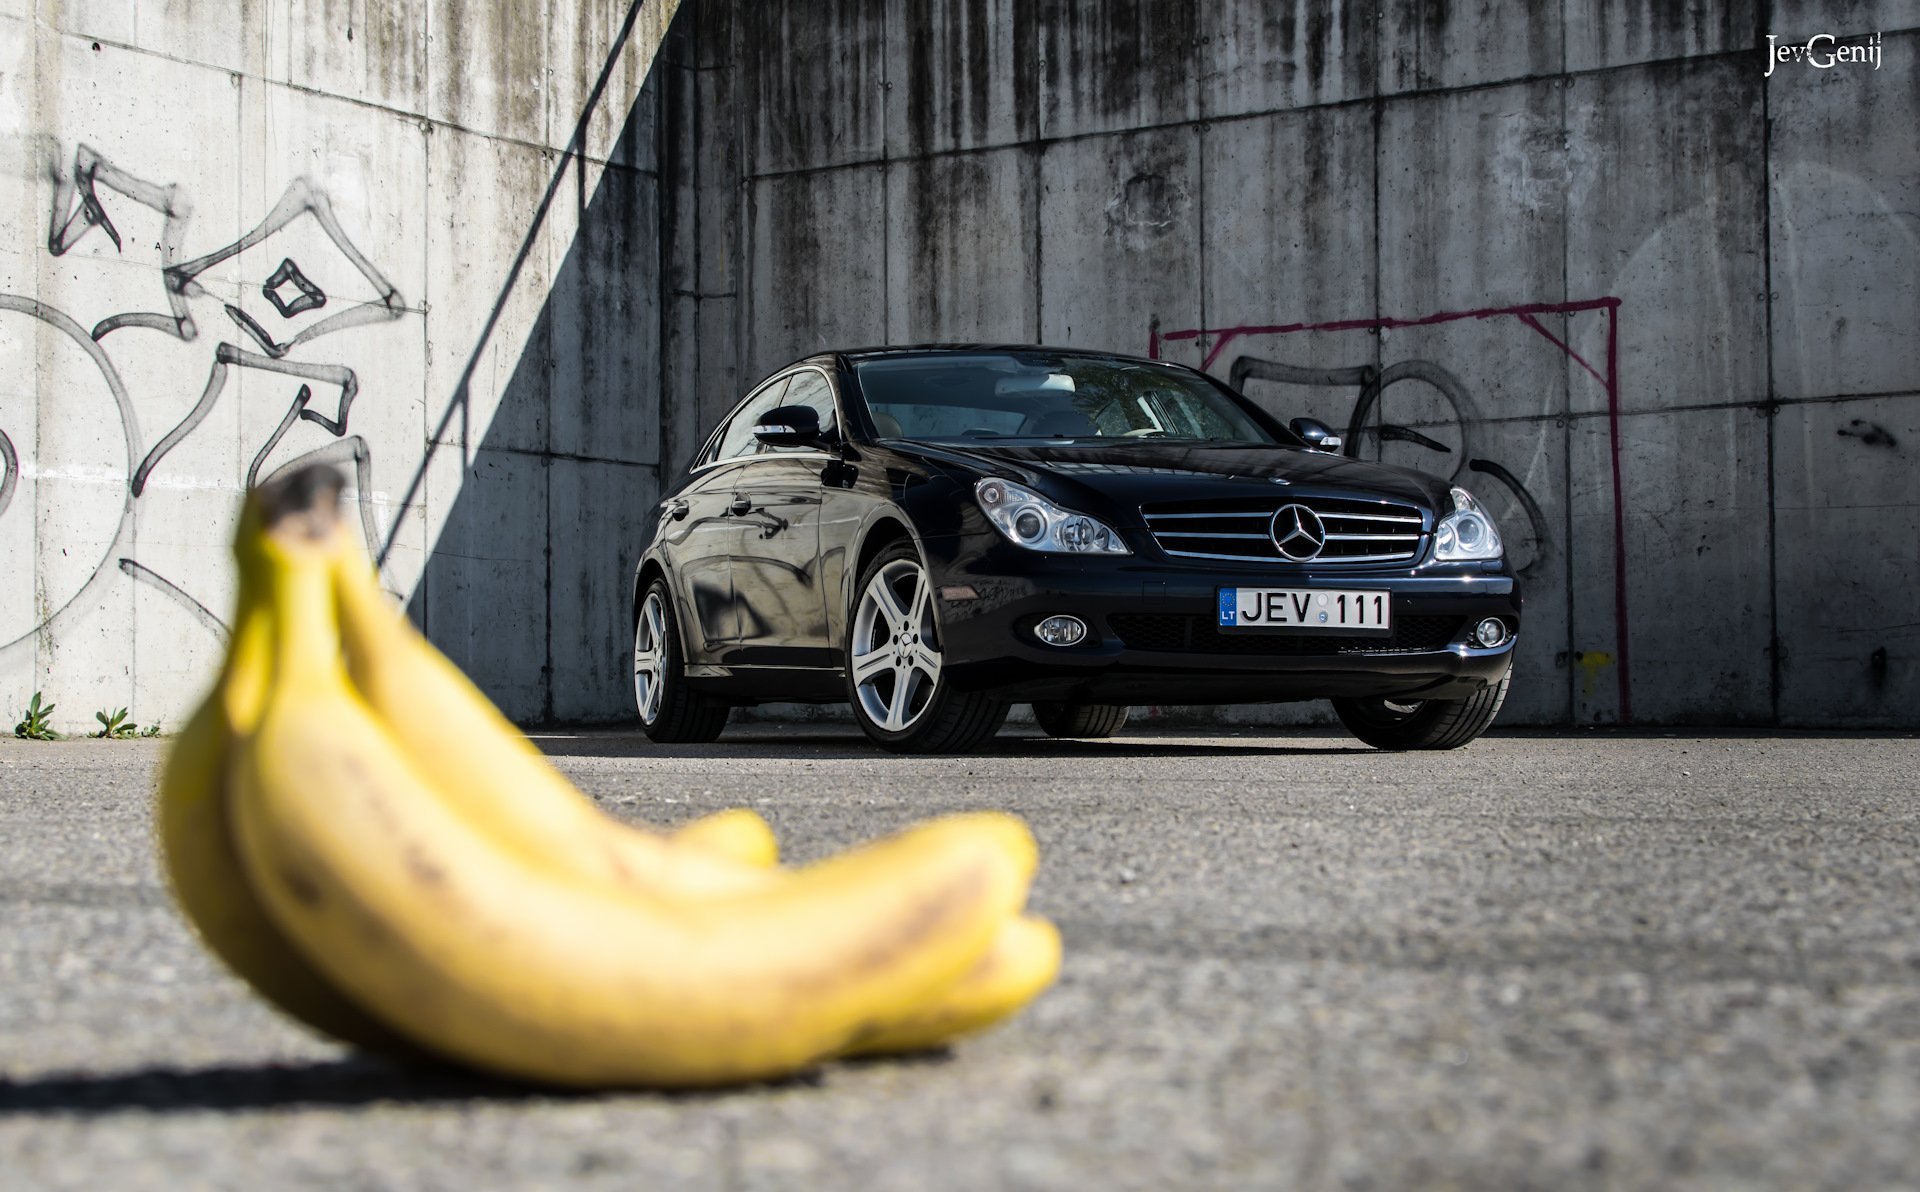 Венгалюи. Мерседес банан 2004. Mercedes Benz banan. Мерседес Бенц банан с180. Мерседес банан.